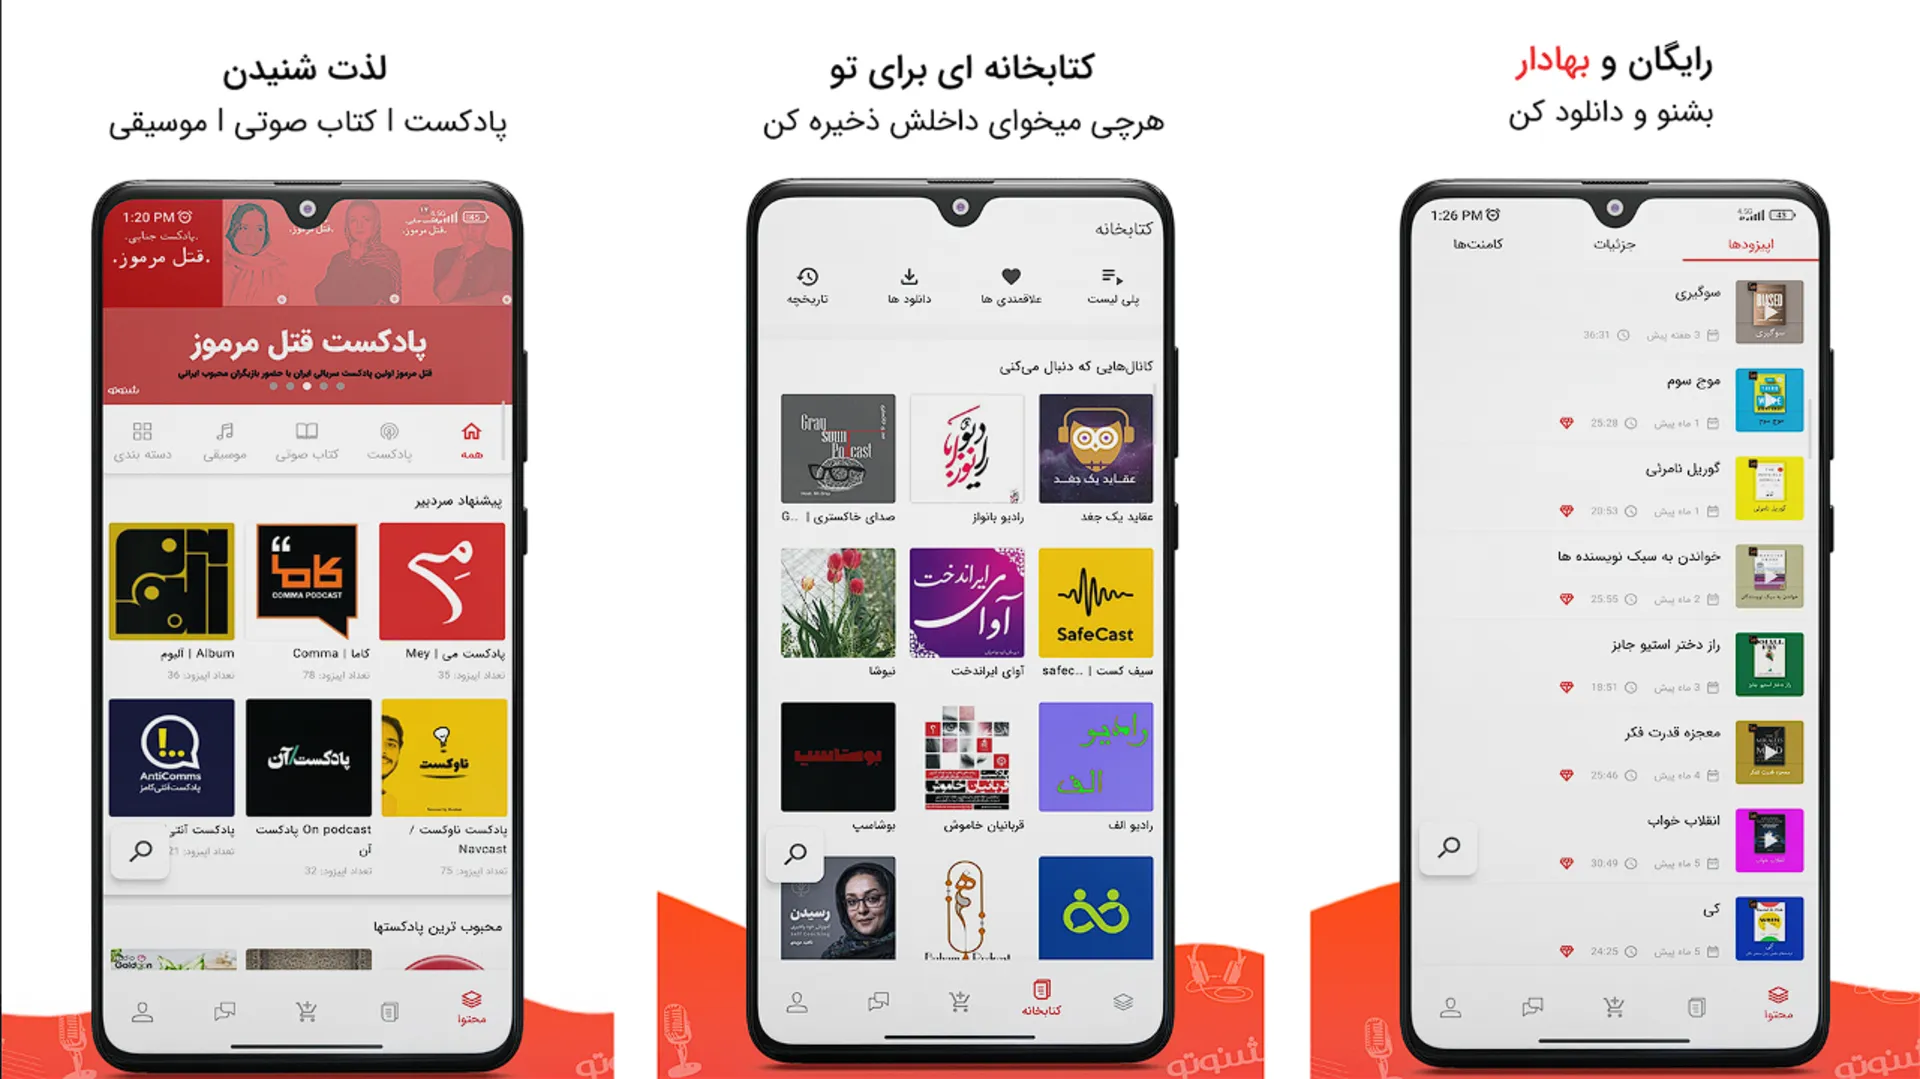 اپلیکیشن کتابخوان ایرانی شنوتو